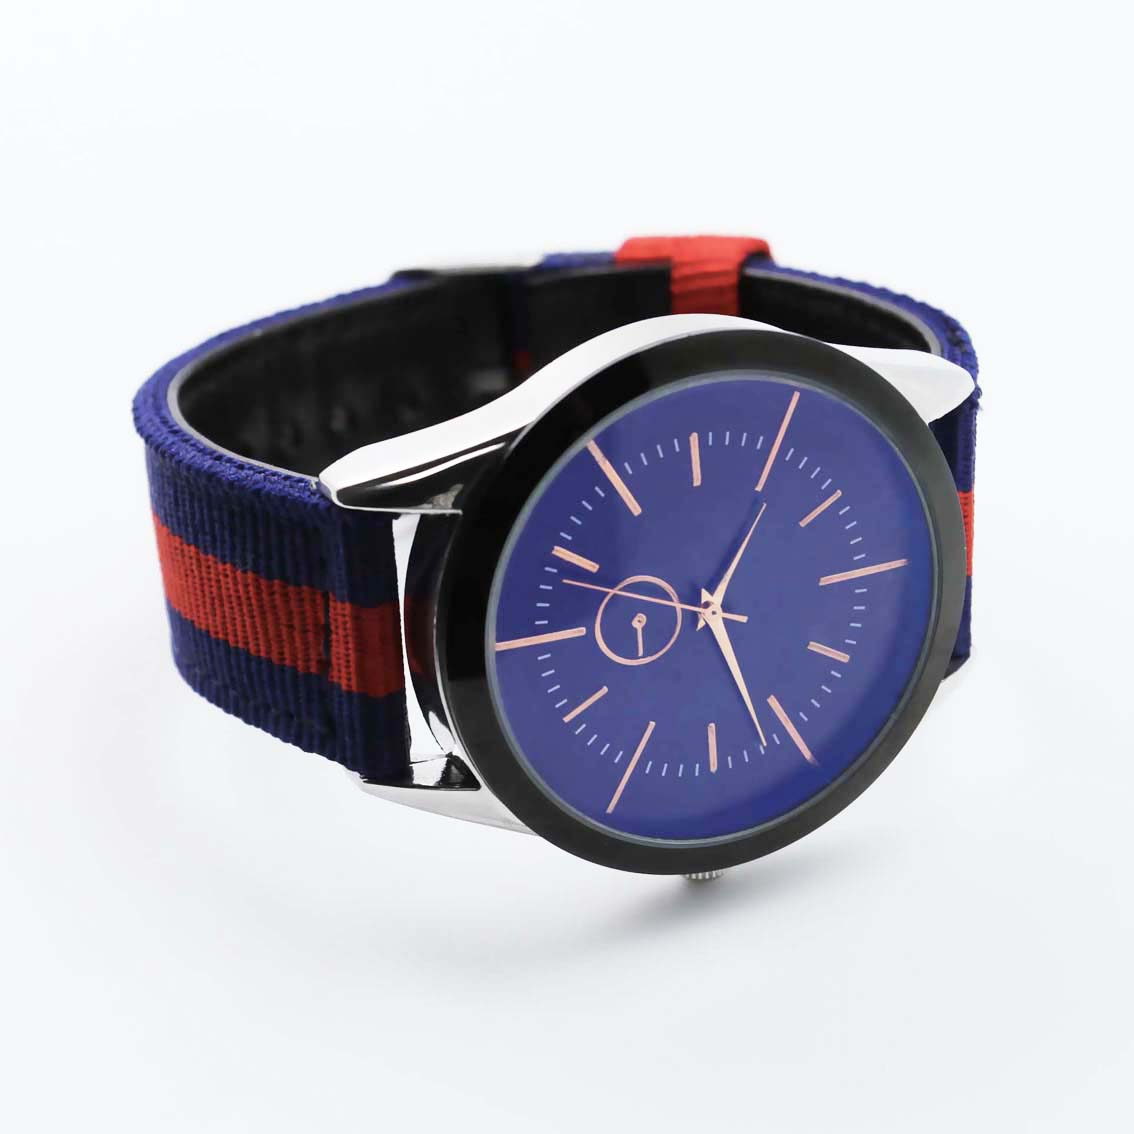 #02009Men's wristwatch quartz analog nylon strap watch